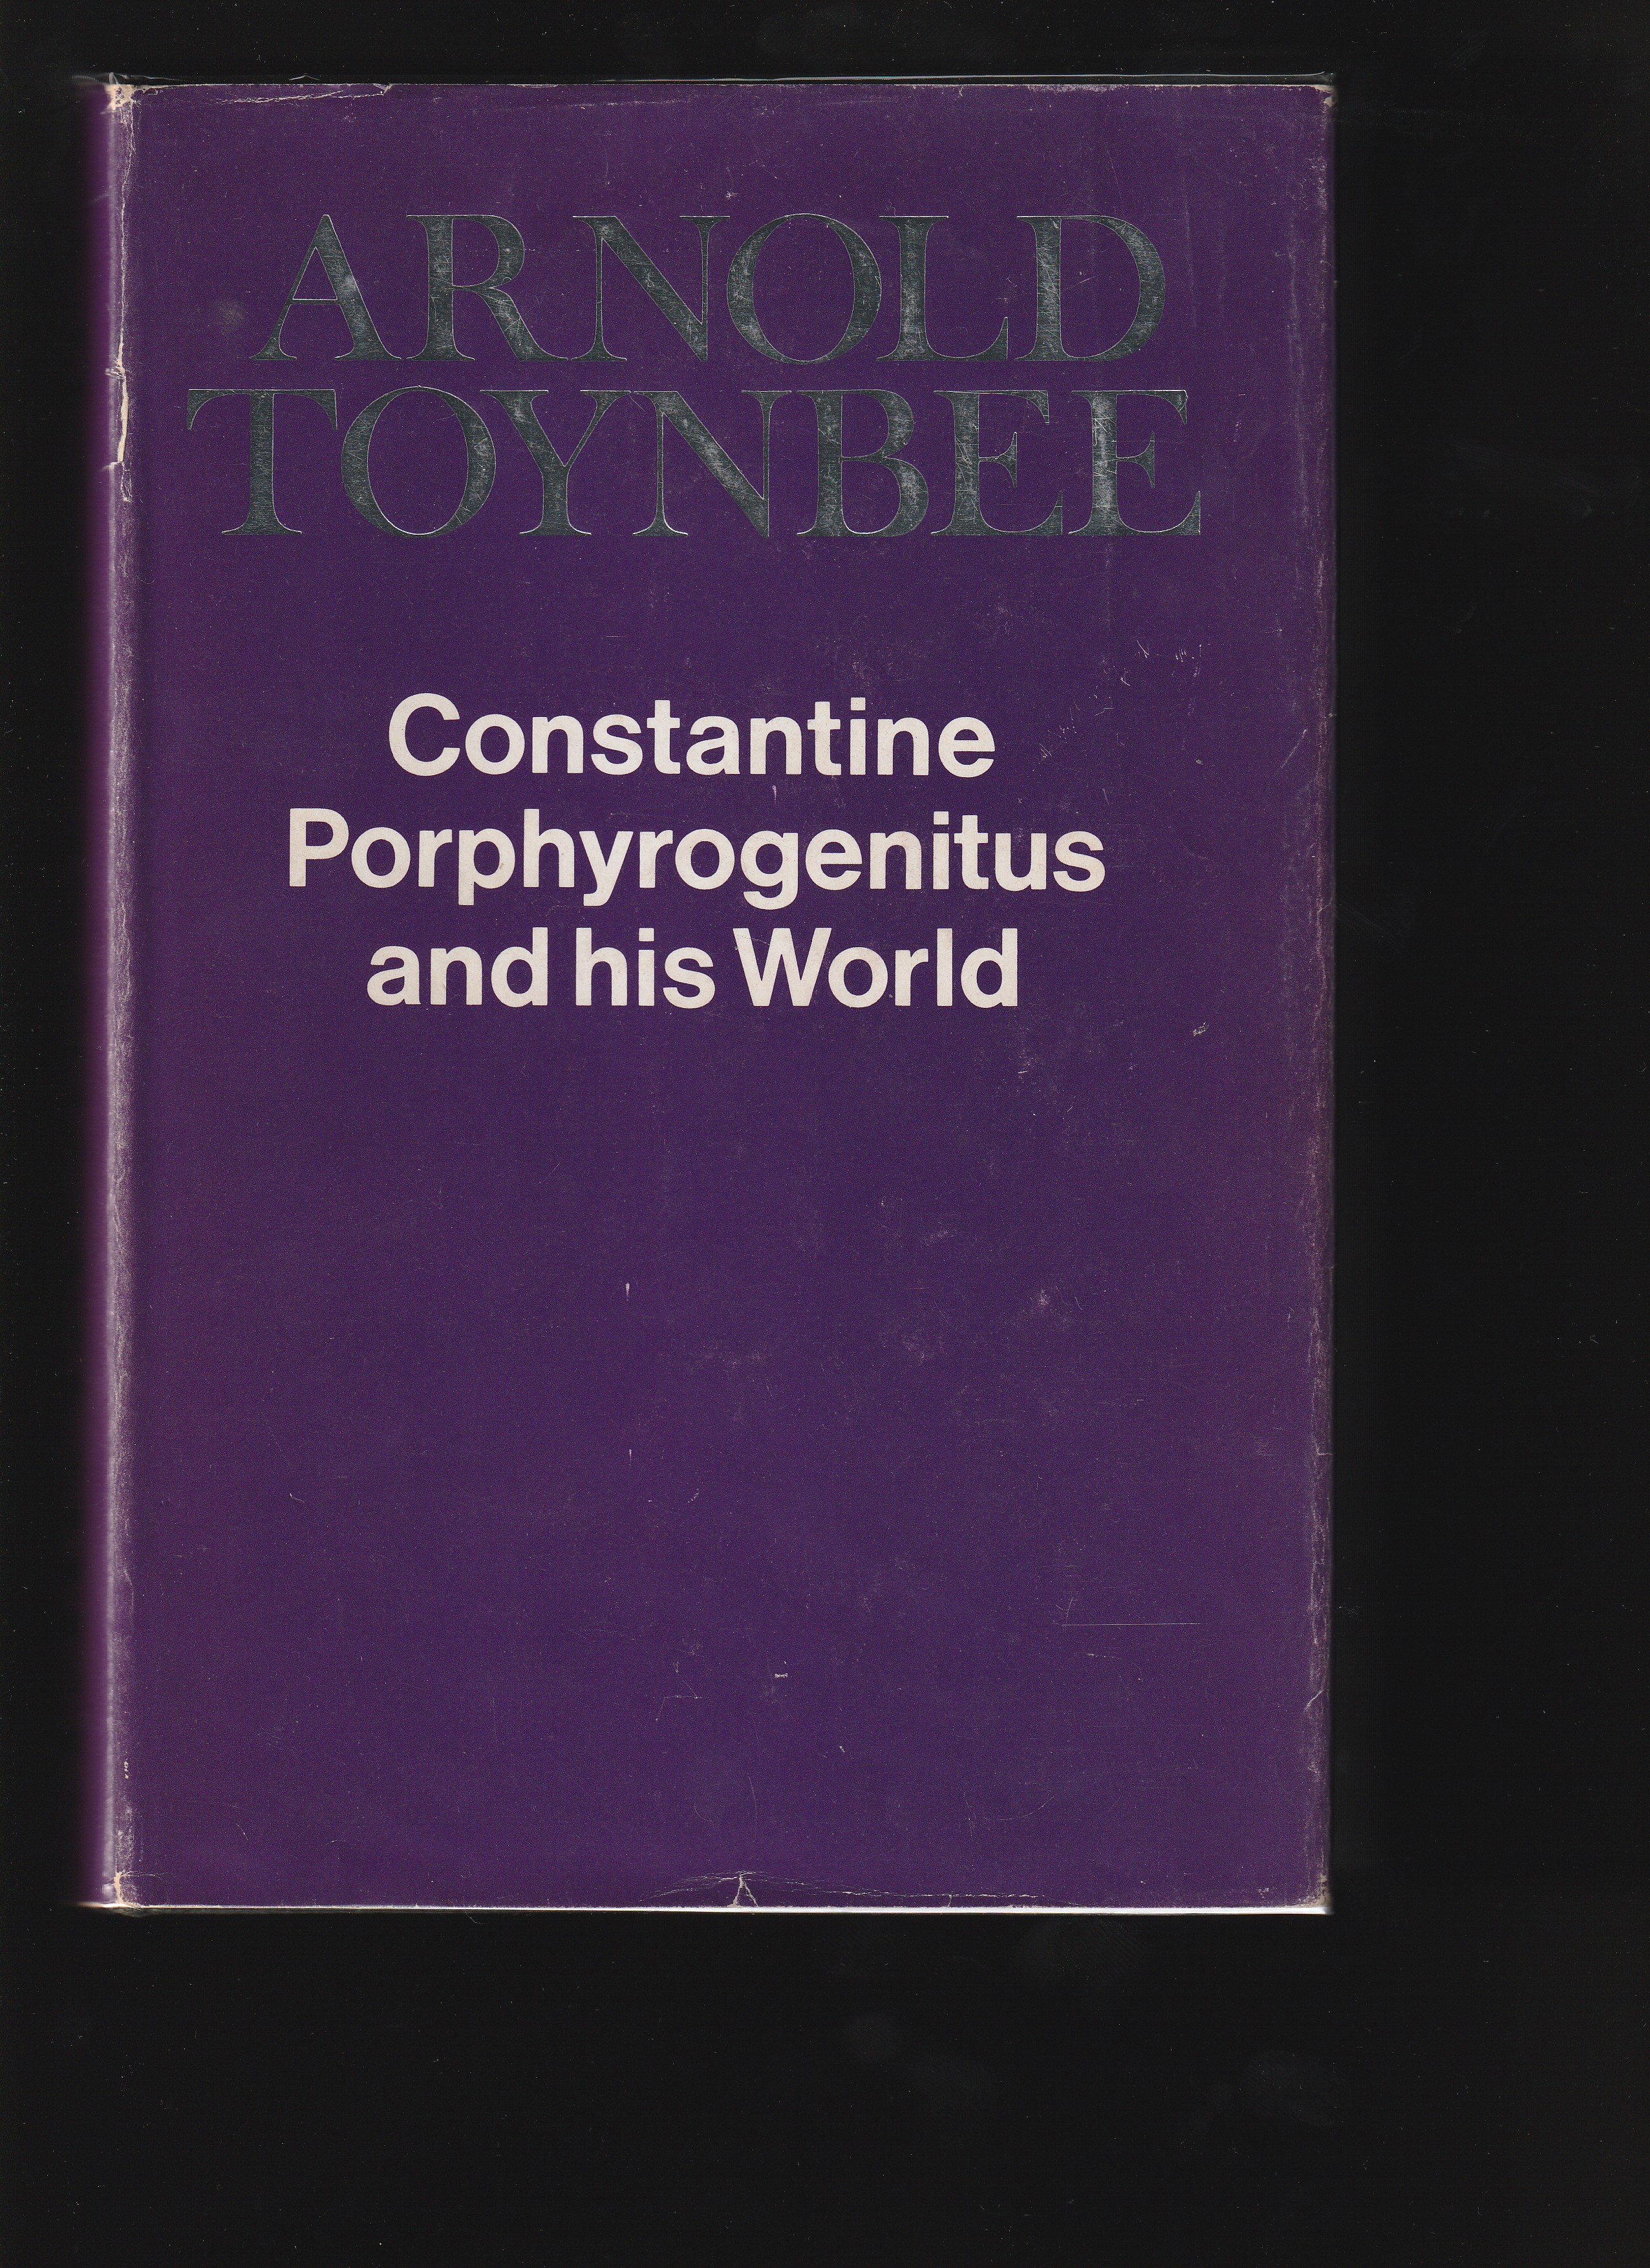 CONSTANTINE PORPHYROGENITUS AND HIS WORLD - TOYNBEE, Arnold